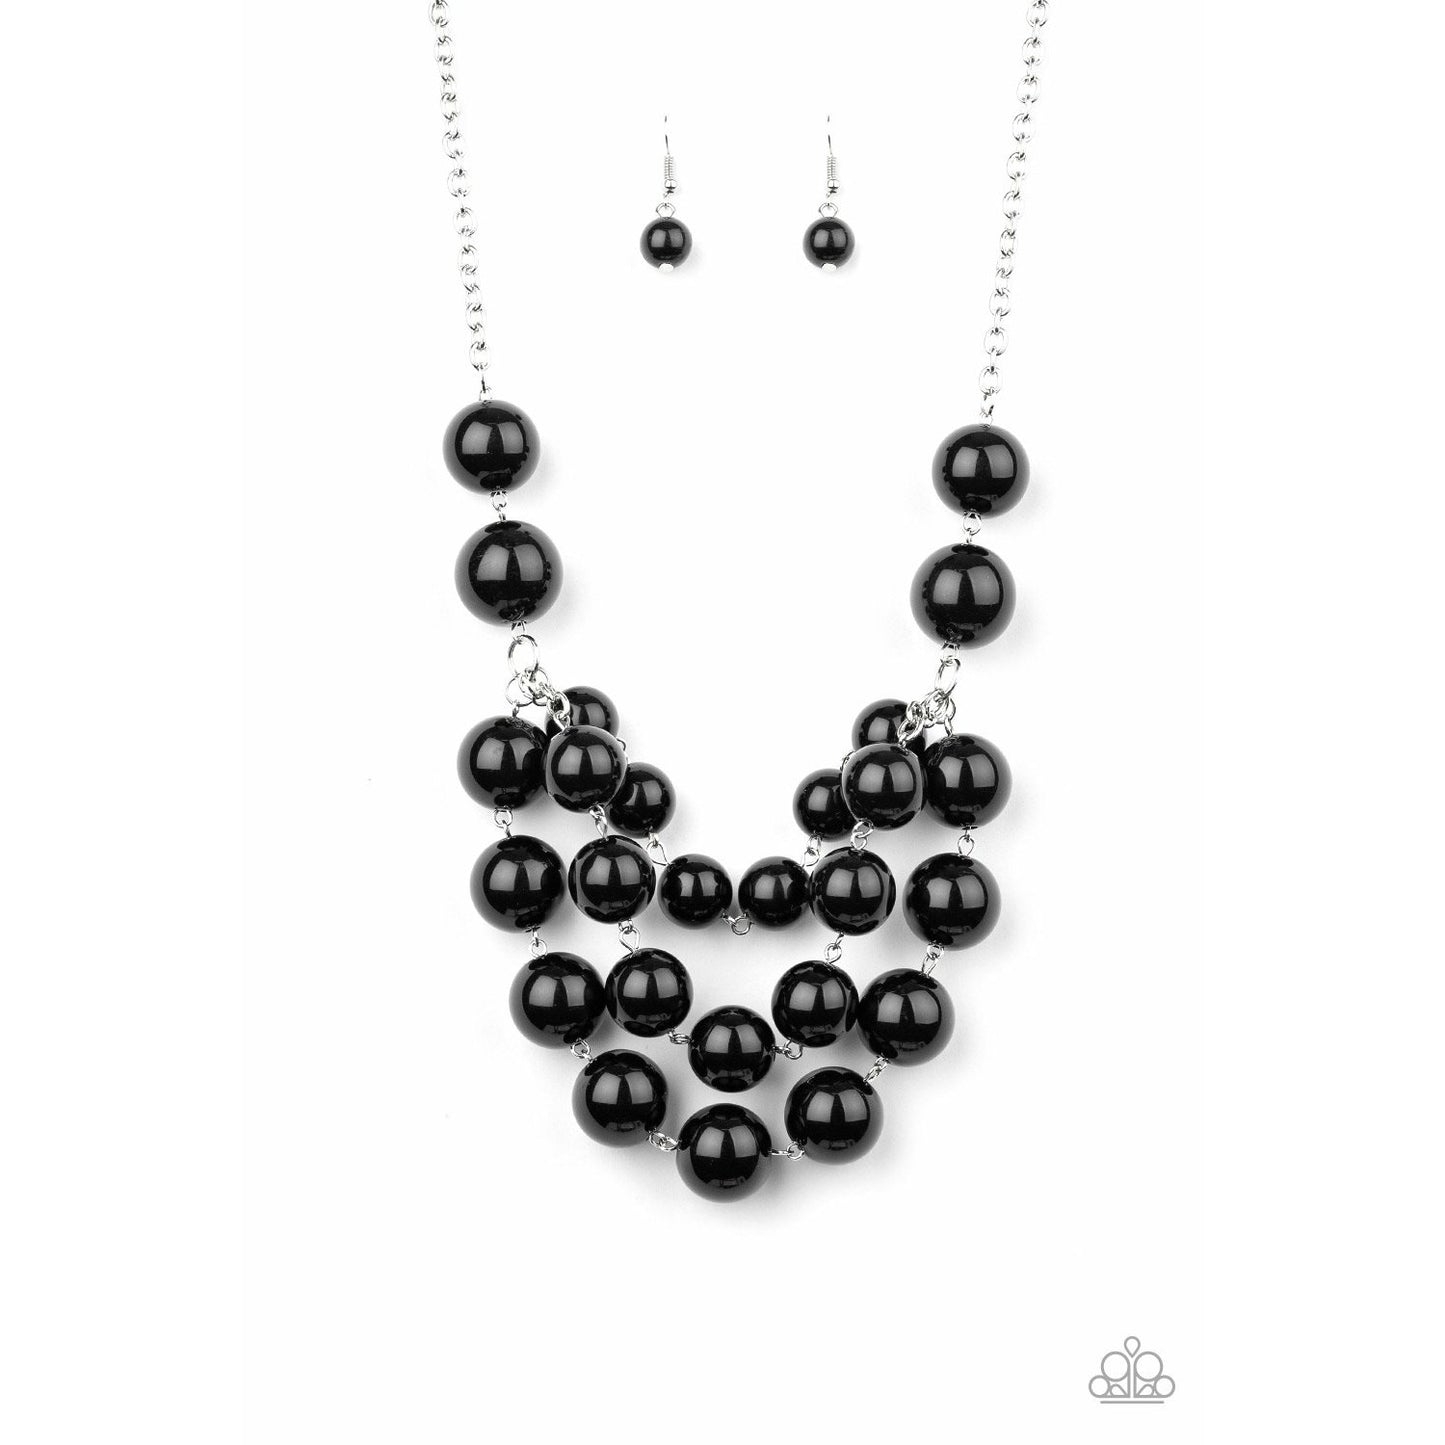 Miss Pop-YOU-larity - Black necklace